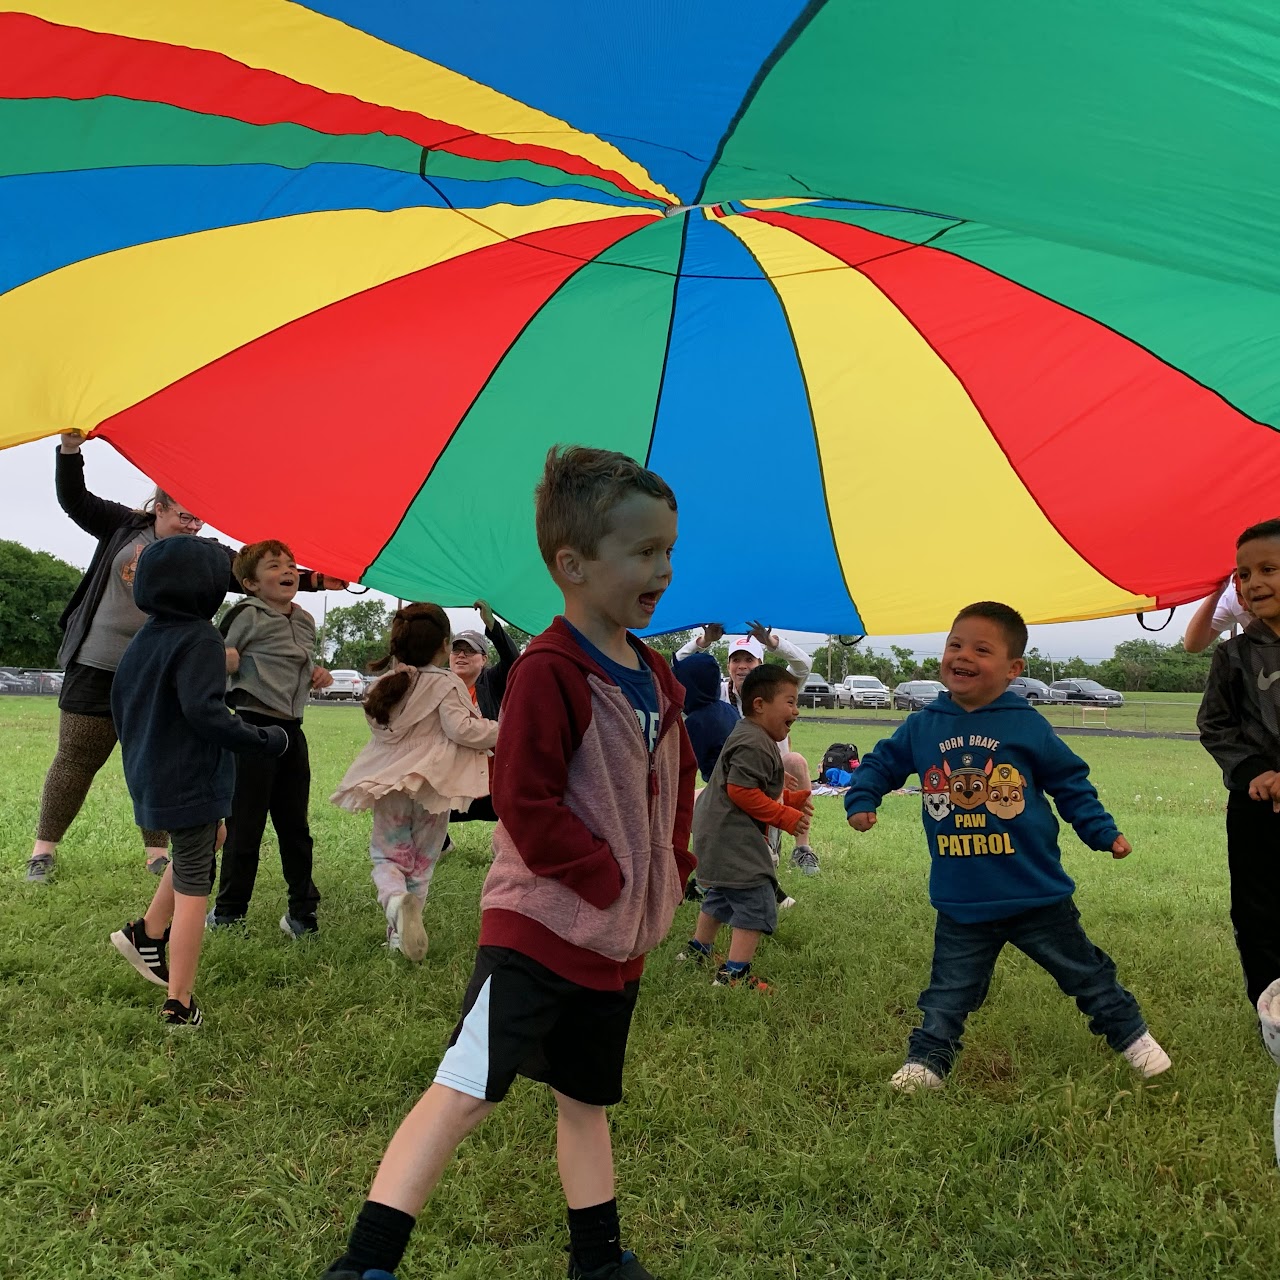 Kids under a colorful umbrella